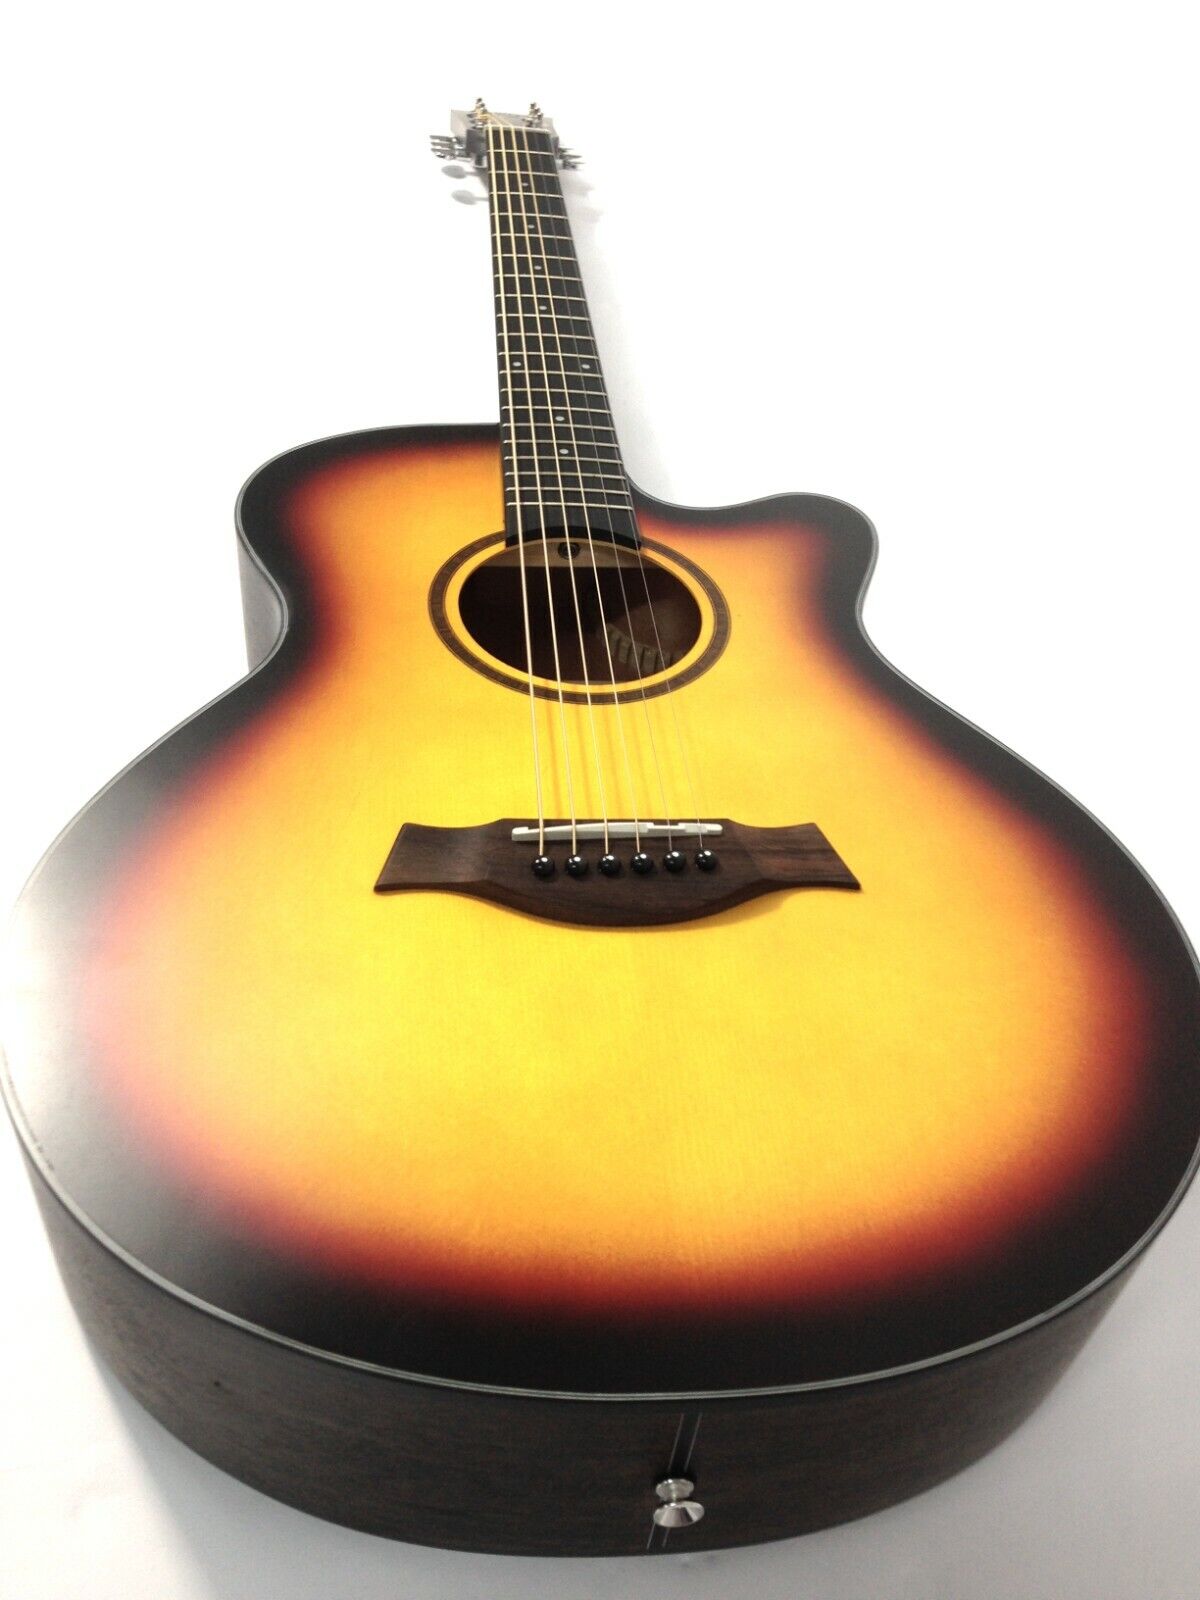 Mentreel Traveler OM Cutaway Spruce Top Acoustic Guitar - Sunburst HM200MMBN